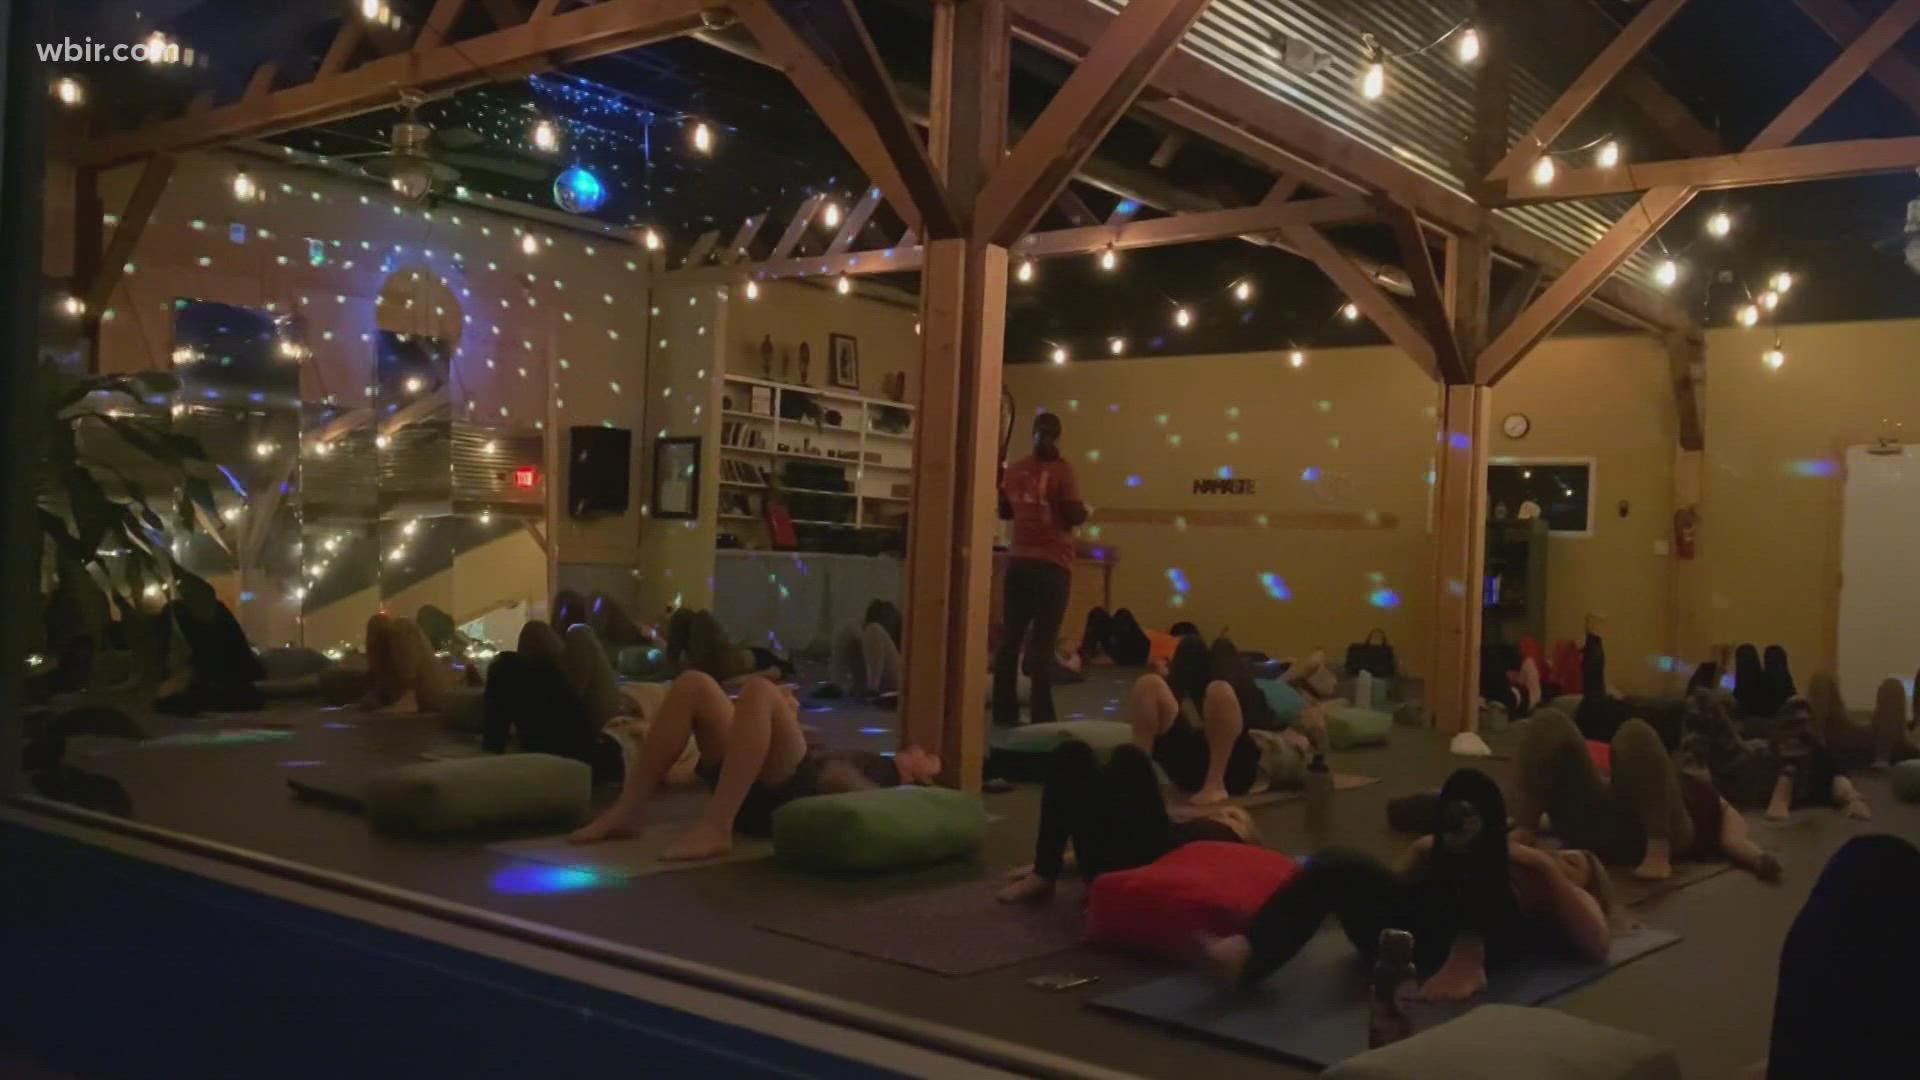 Knoxville yoga studio celebrates Fridays with 'Sober Happy Hour